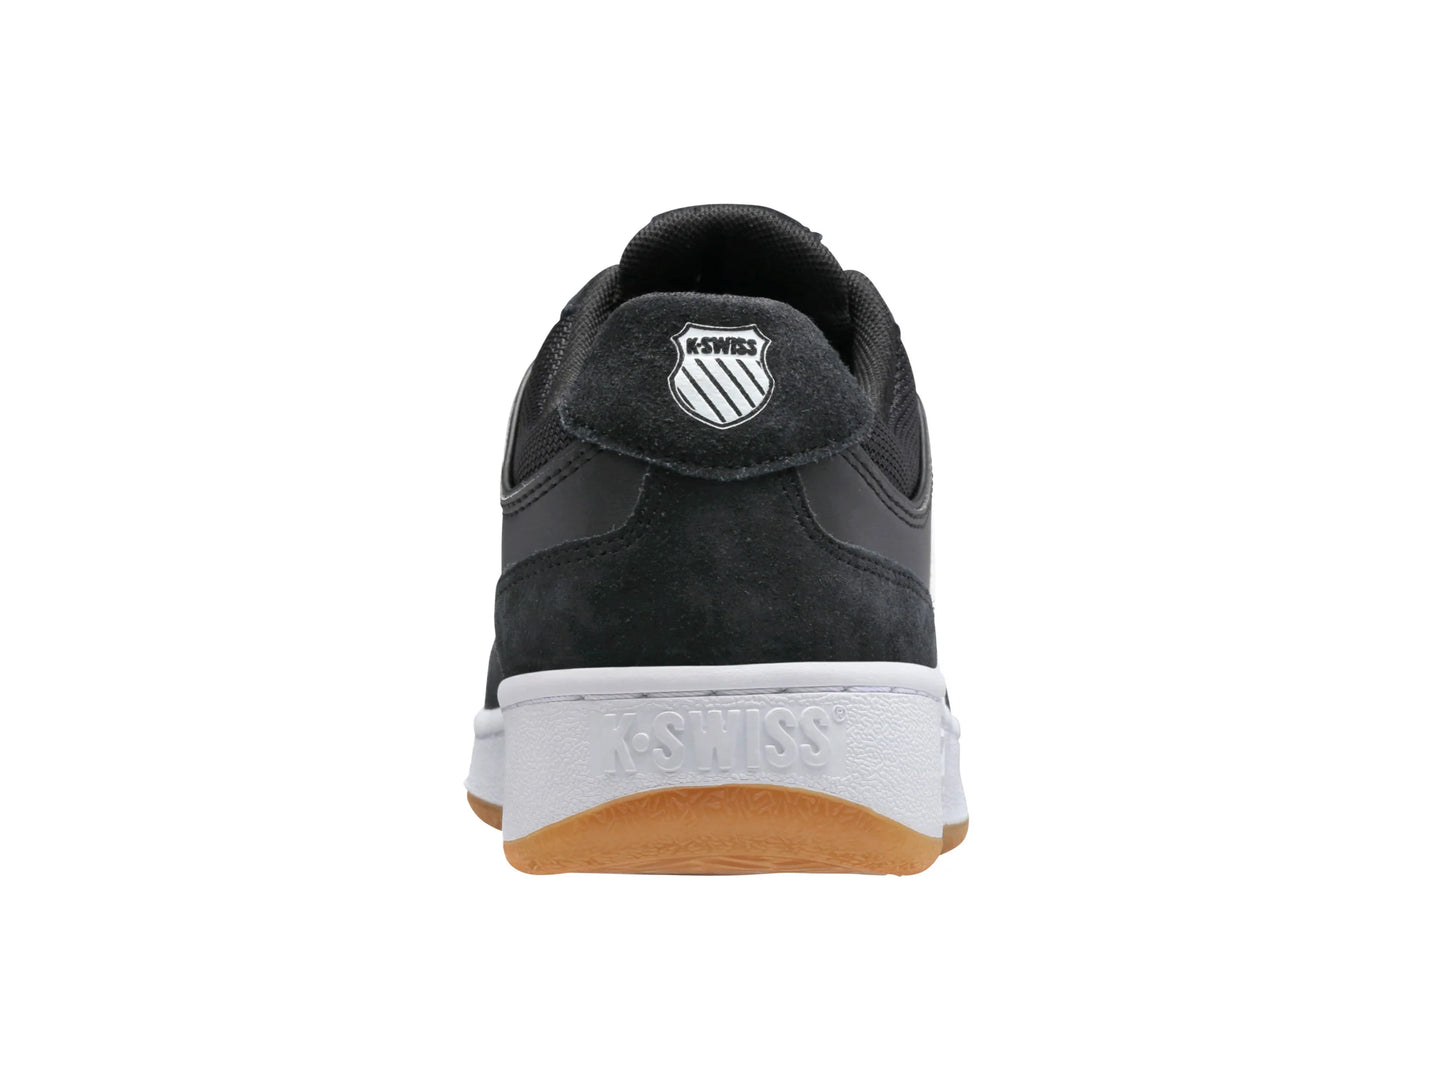 K-Swiss Men's City Court Medium Low Top Shoe Black / White / Gum 06996-031-M